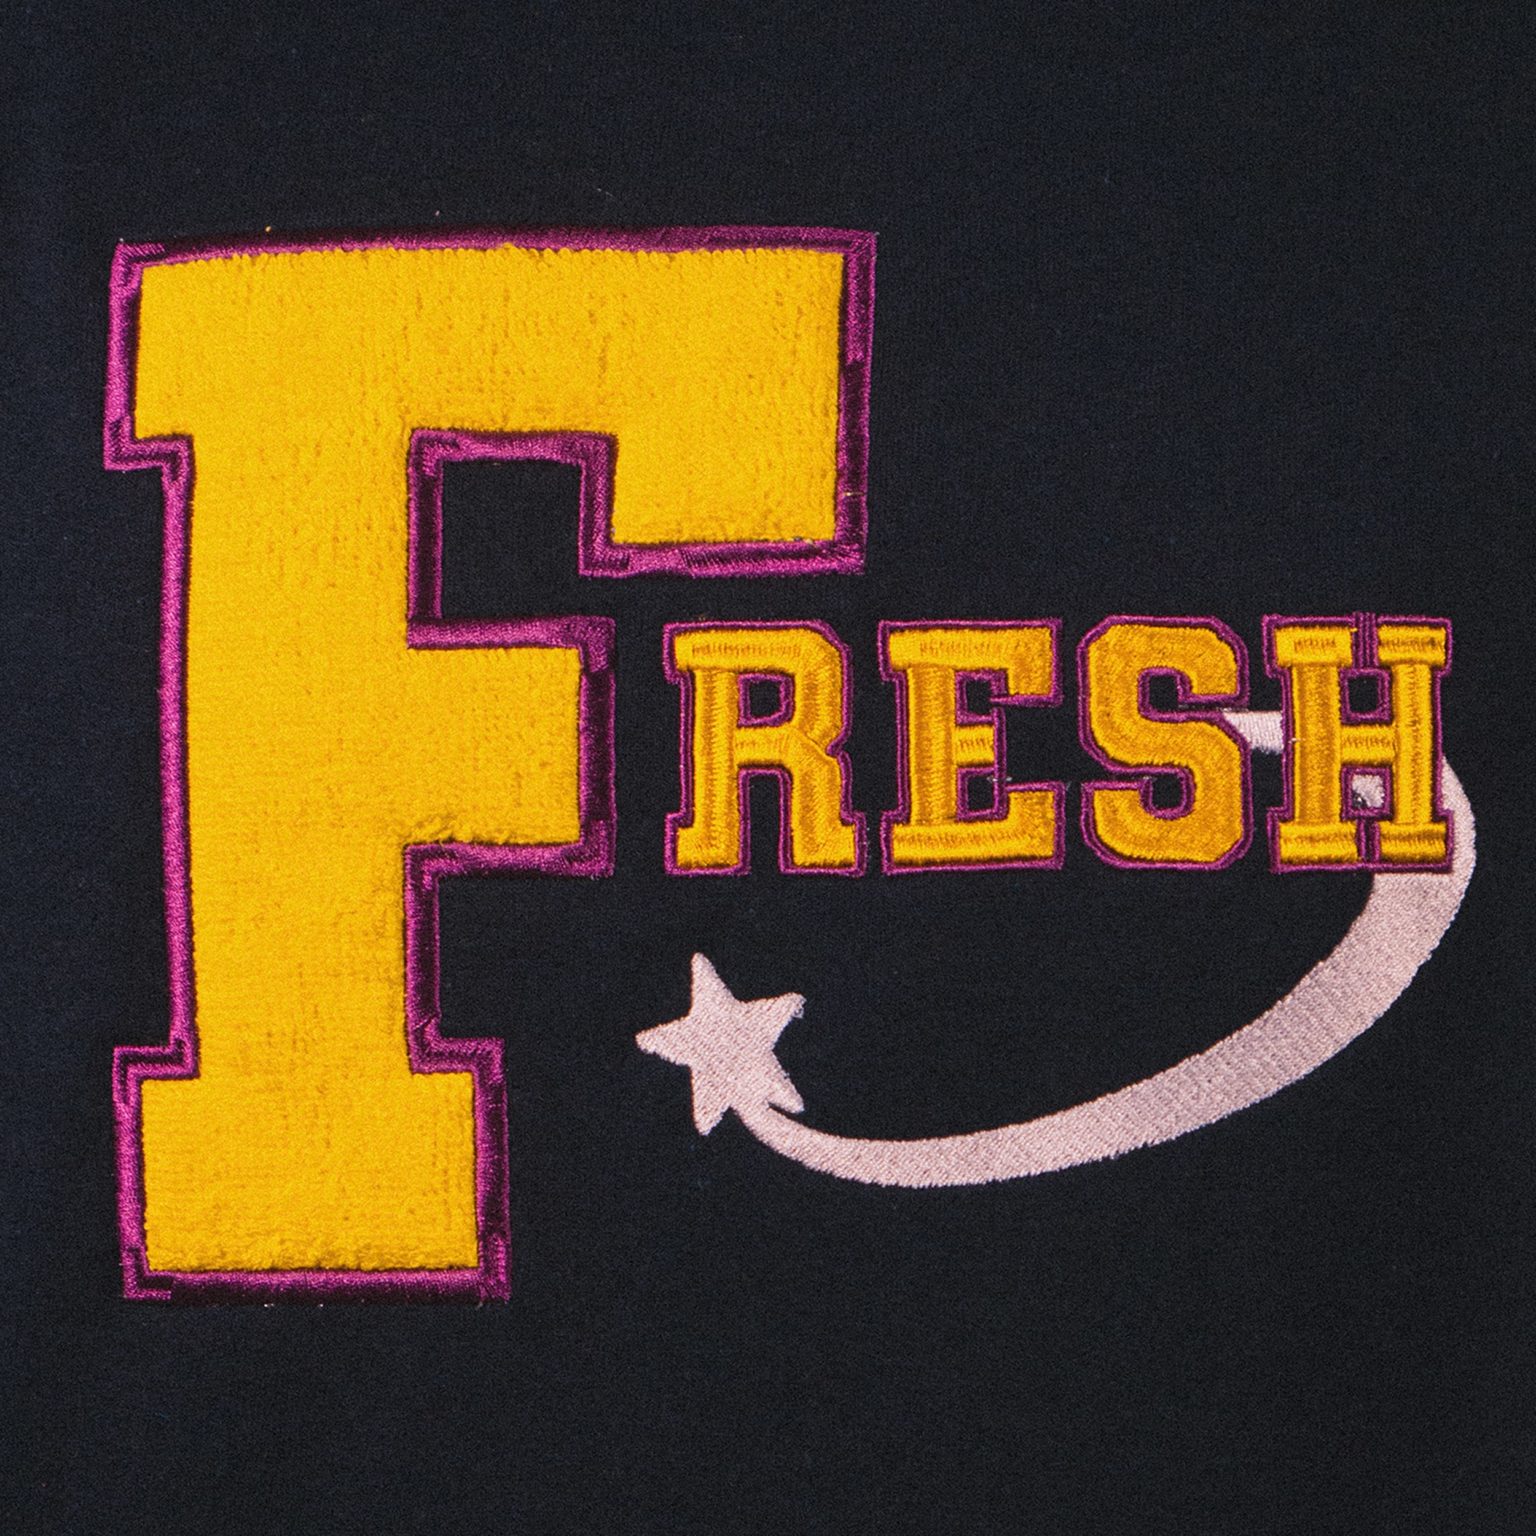 The Fresh Stuff – Varsity Unisex Embroidered Sweatshirt (Navy)